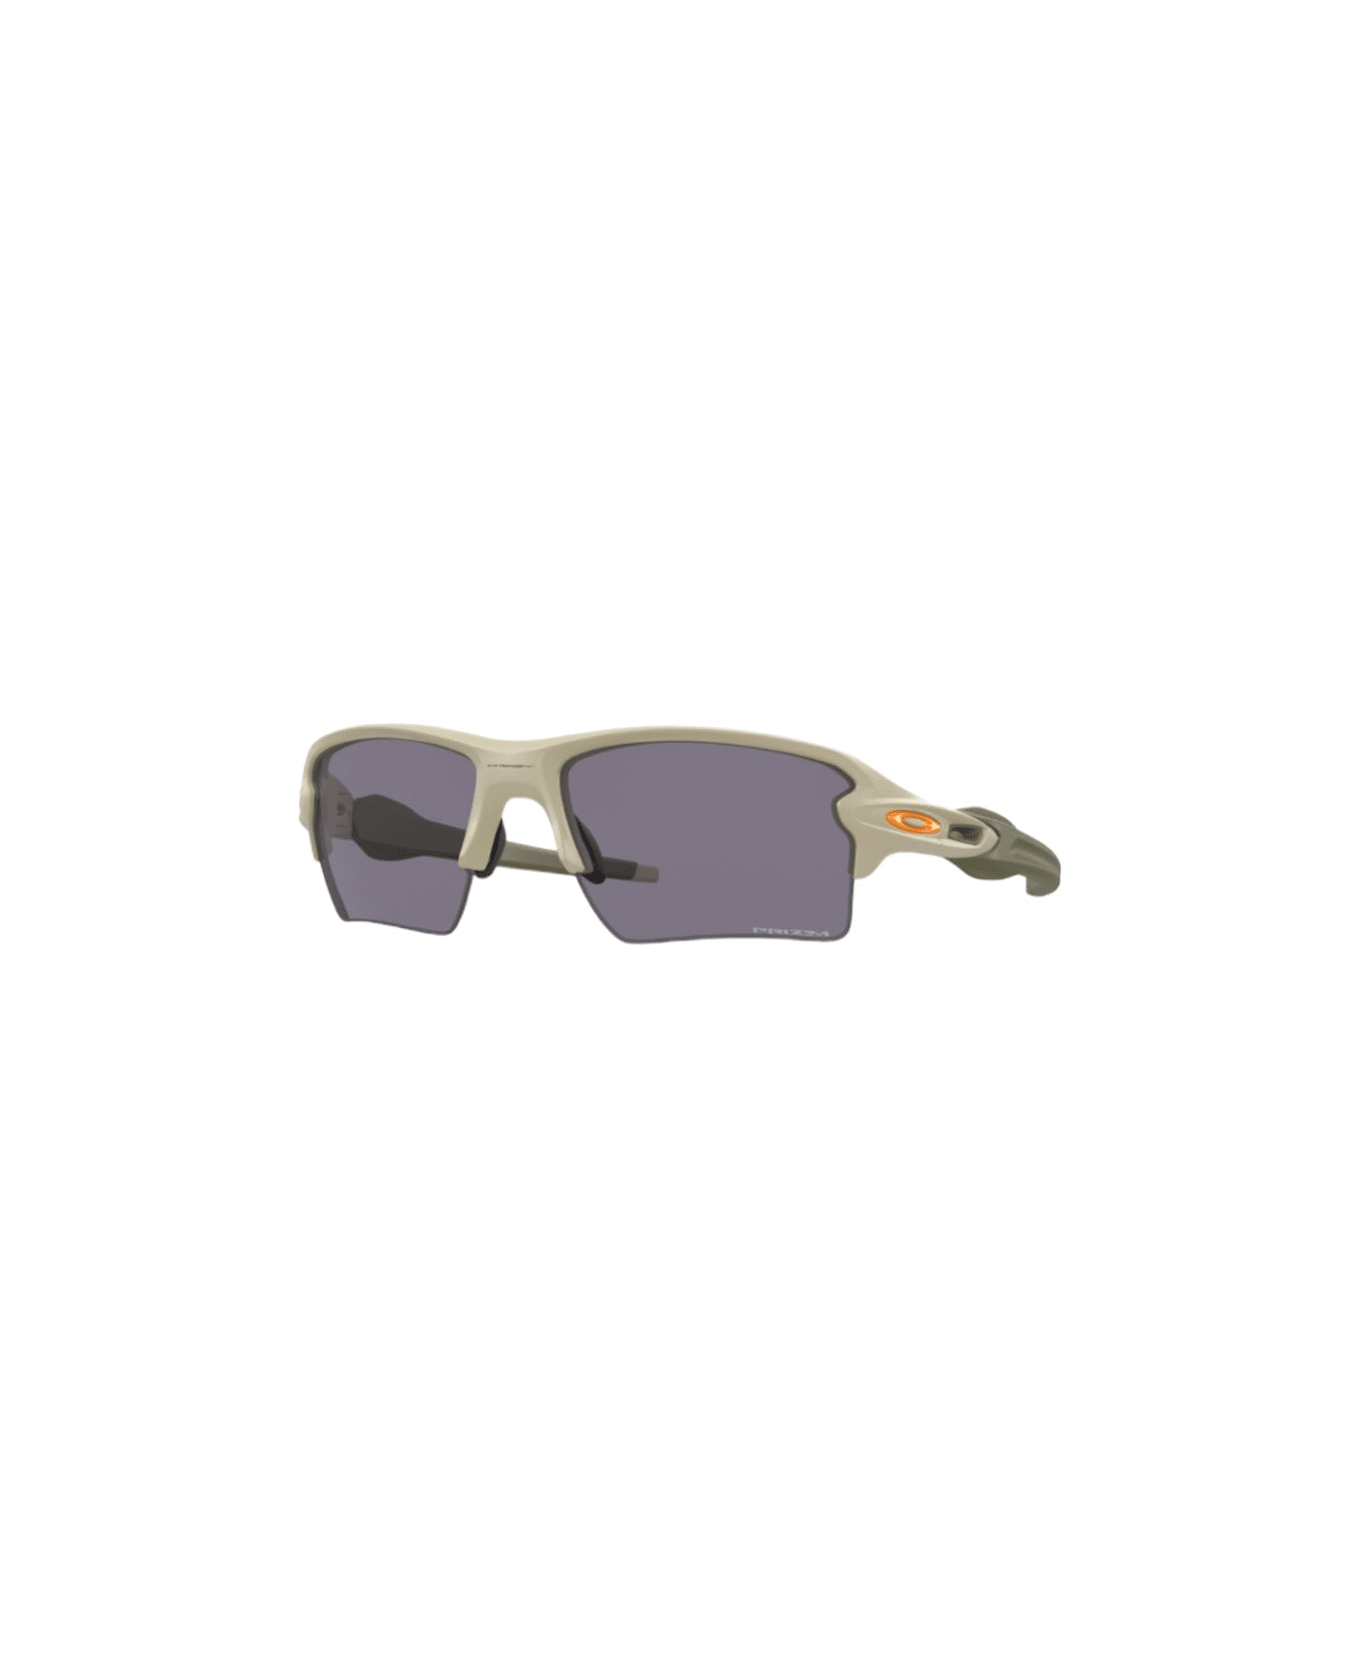 Oakley Flak 2.0 Xl - 9188 Sunglasses